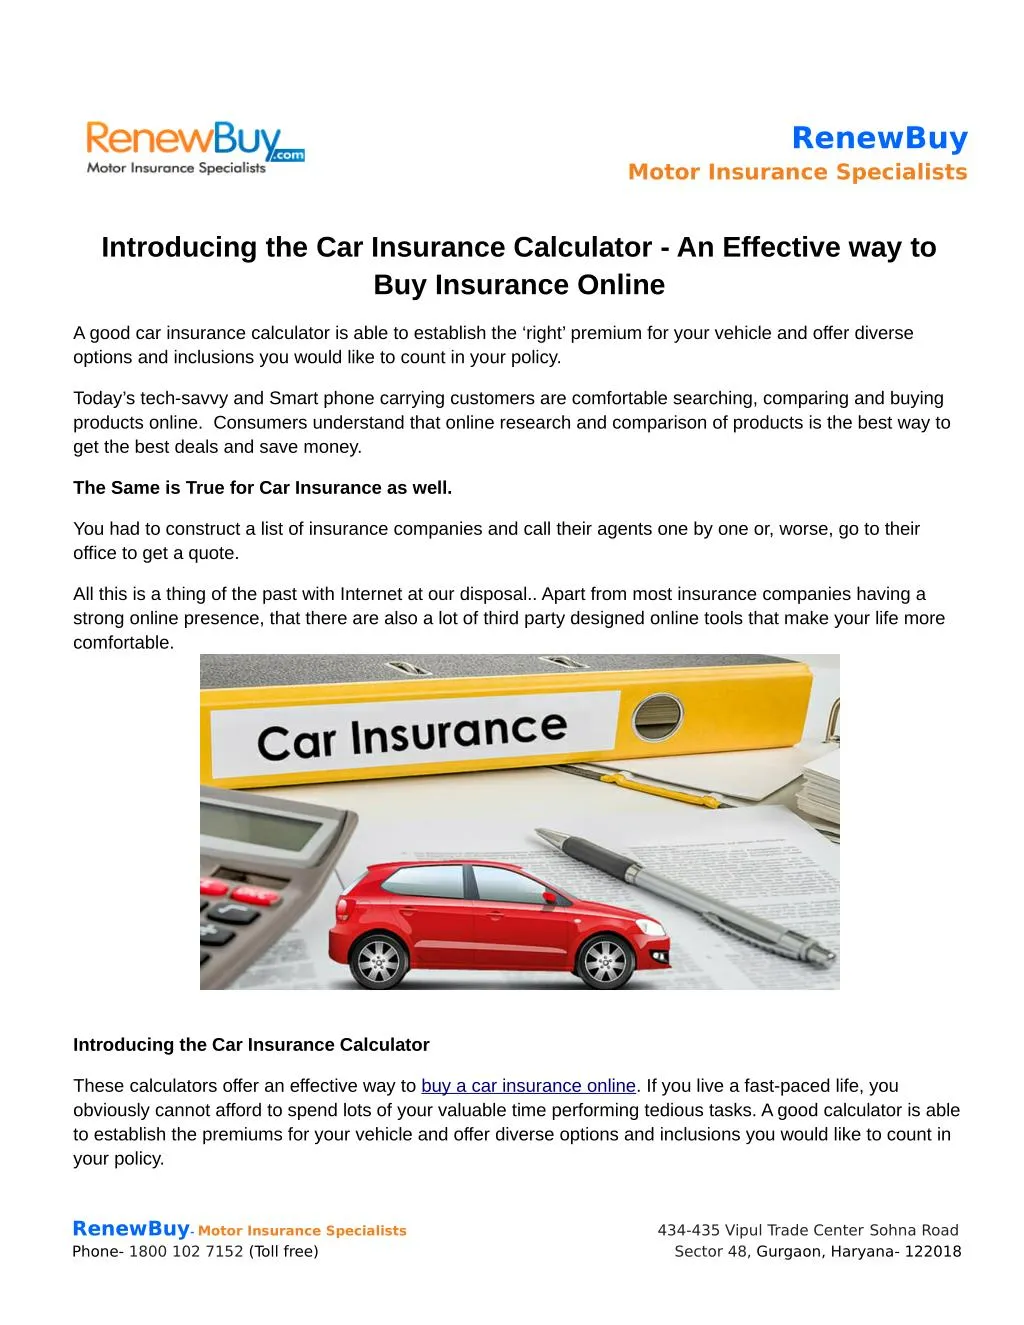 PPT Introducing the Car Insurance Calculator An